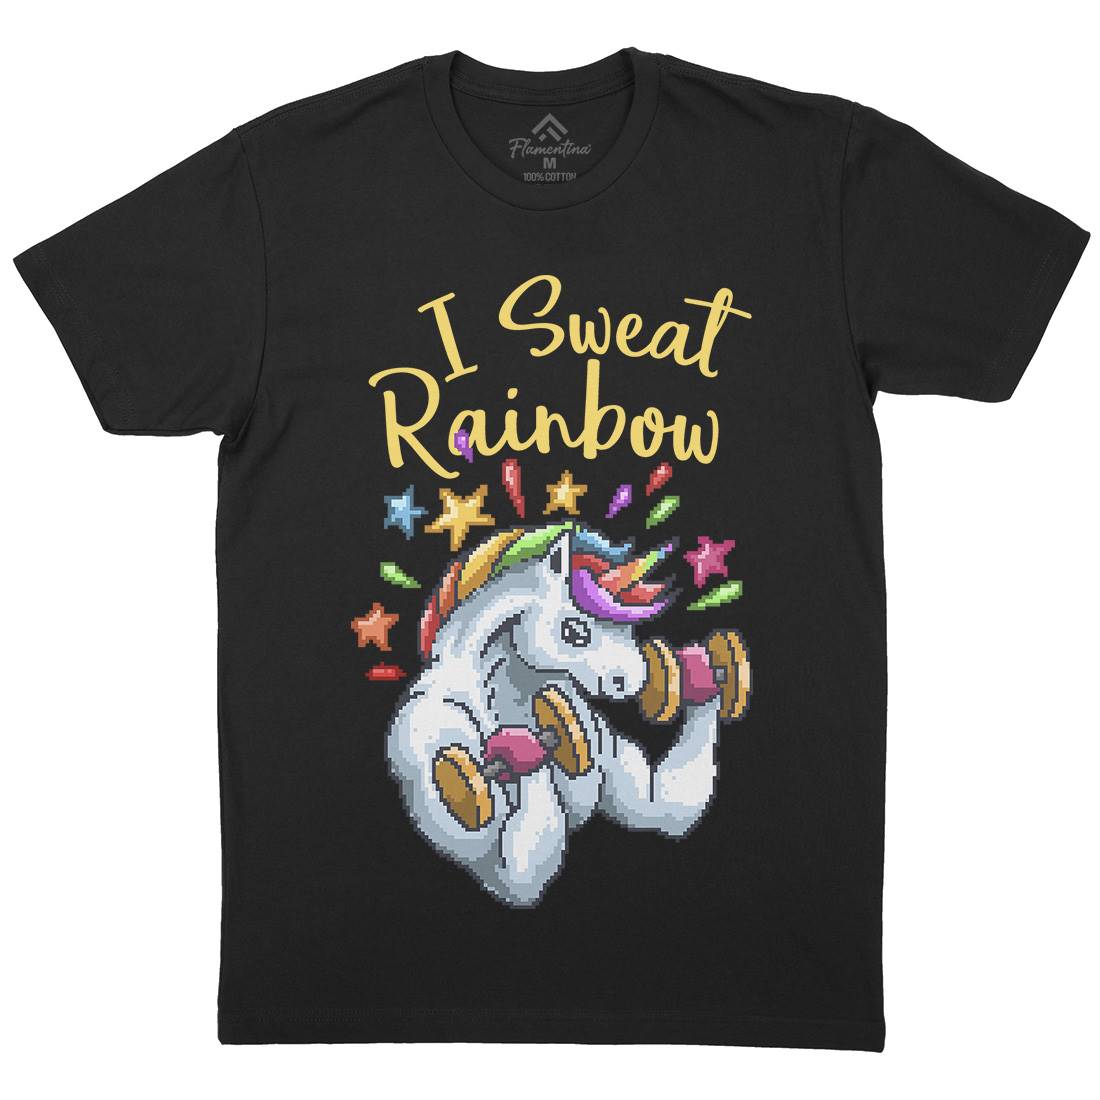 I Sweat Rainbow Mens Crew Neck T-Shirt Retro B916